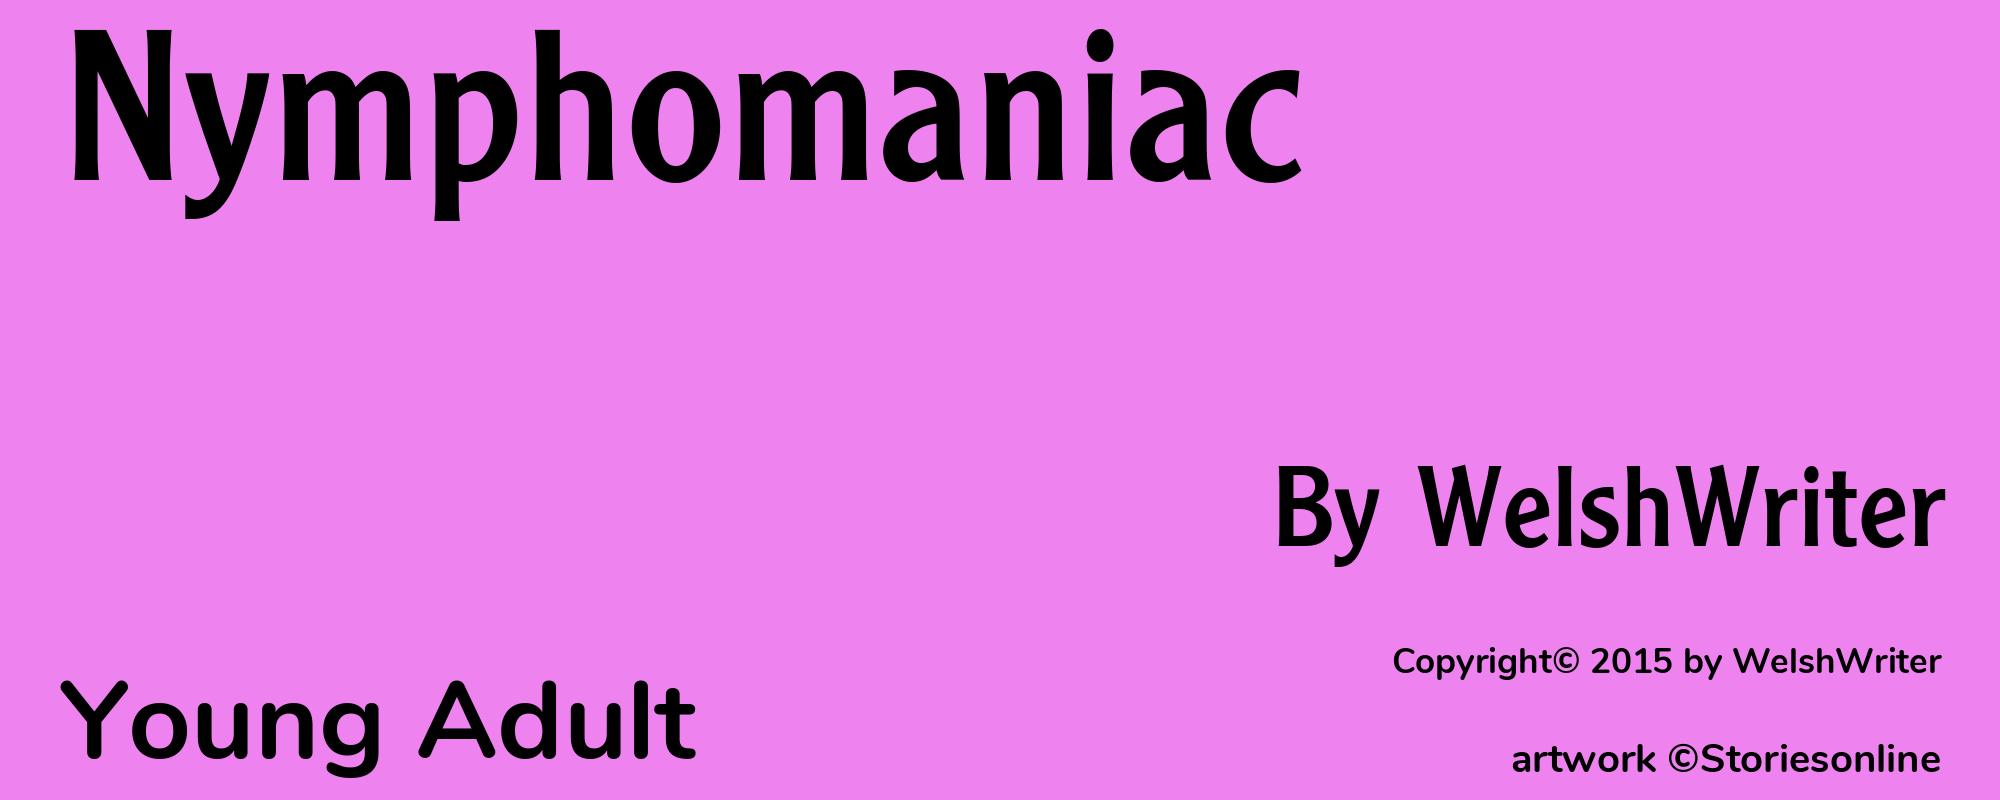 Nymphomaniac - Cover